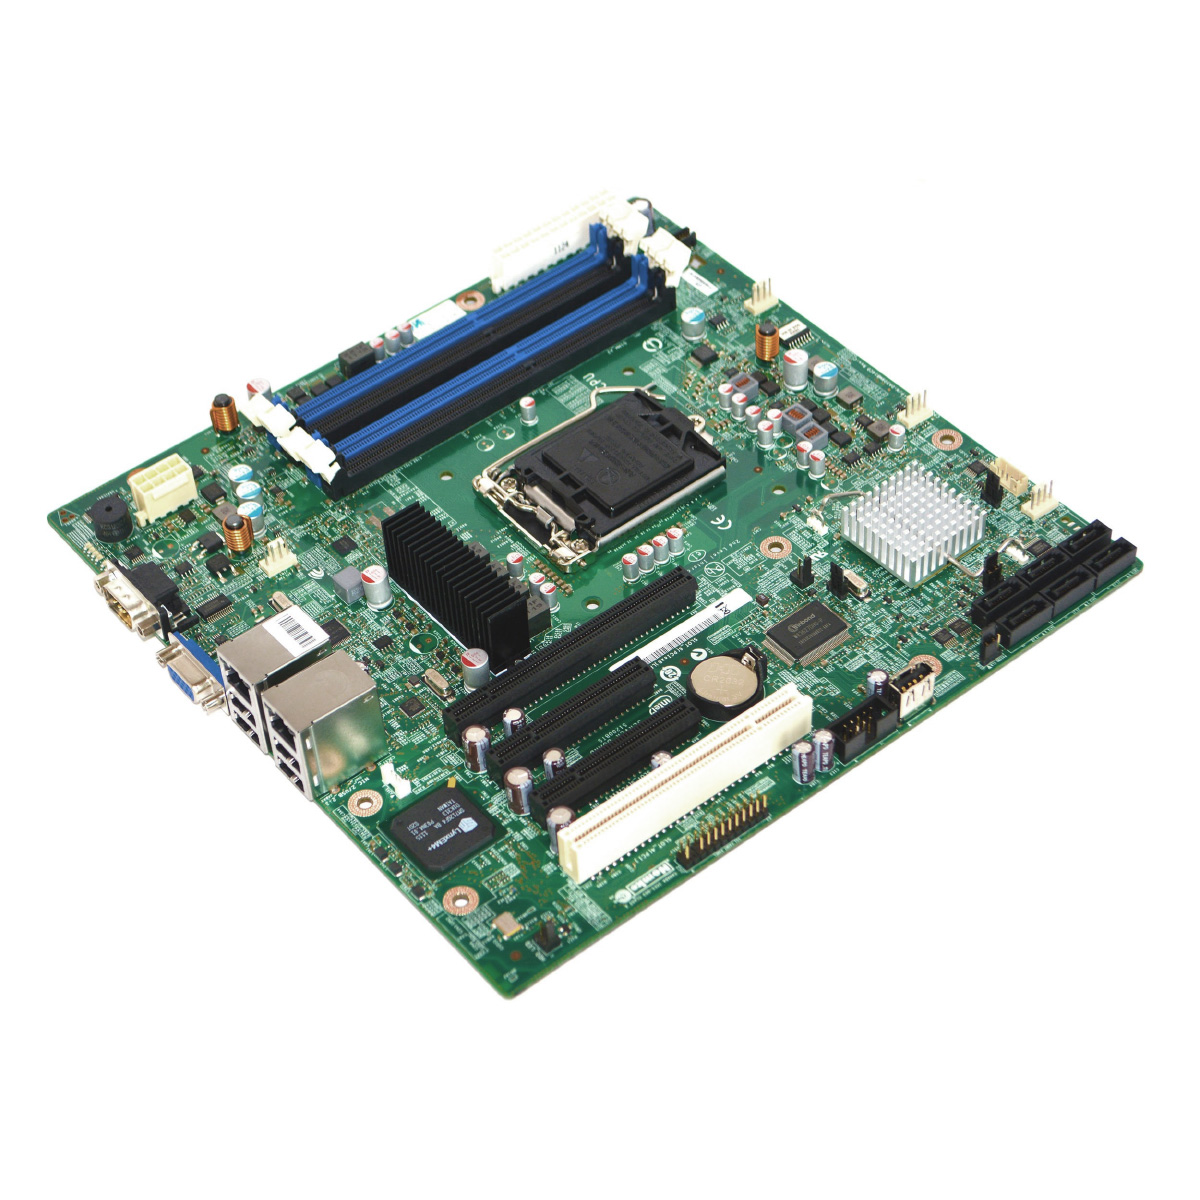 Placa Mãe para Servidor Intel Xeon S1200BTSR - (LGA 1155 - DDR3 ECC) - Chipset C252 - Dual LAN - OEM